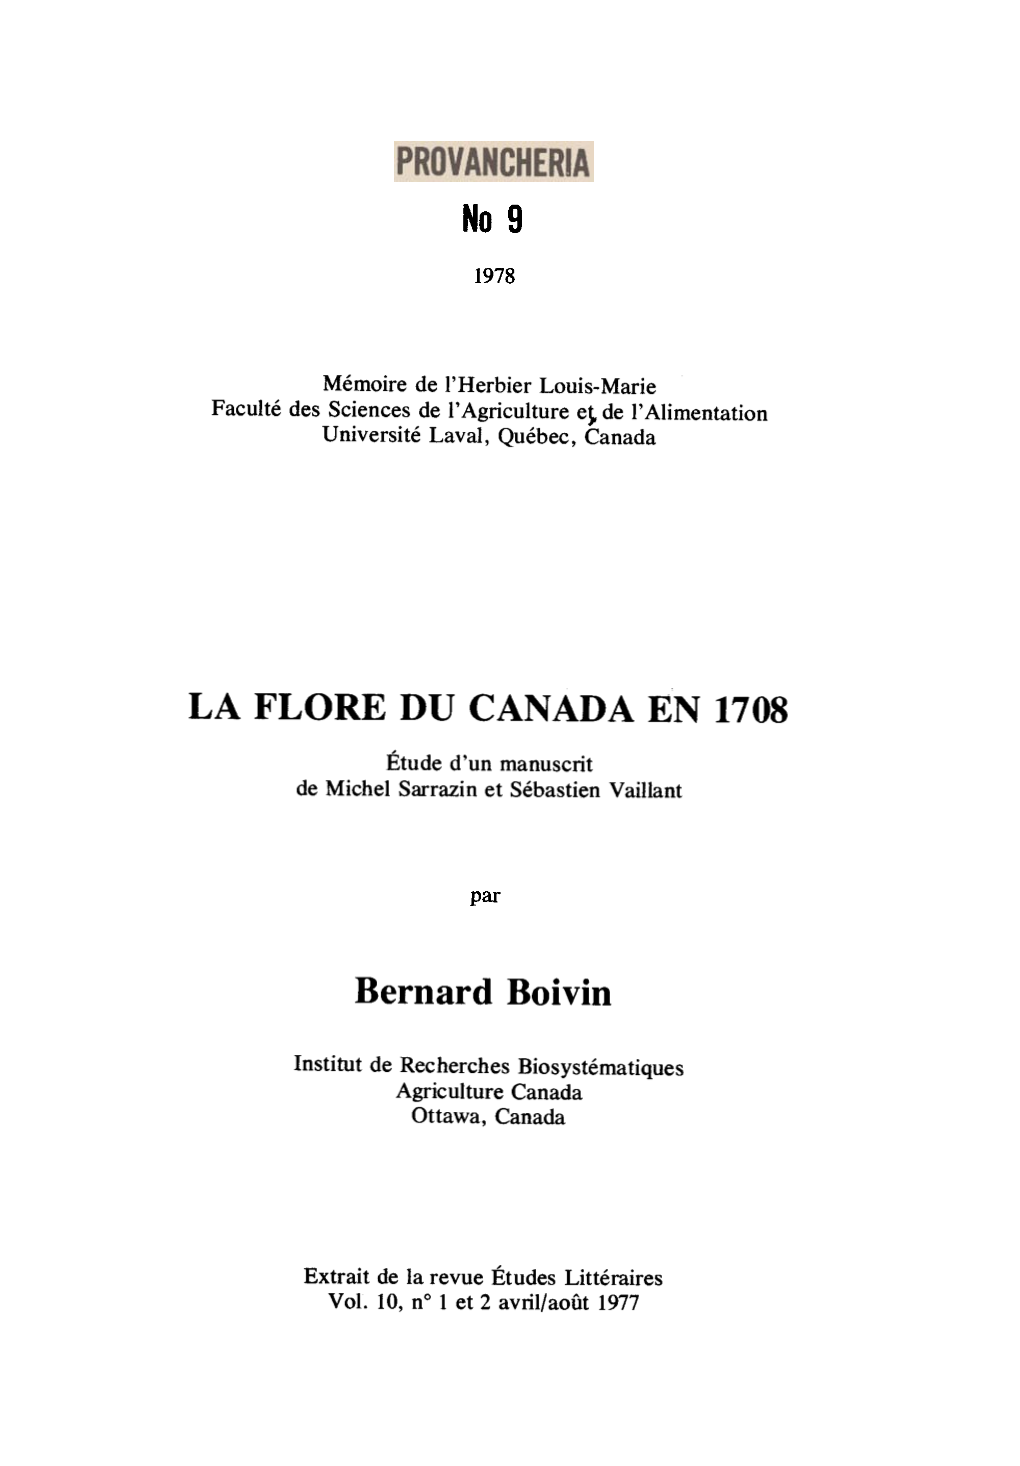 LA FLORE DU CANADA EN 1708 Bernard Boivin